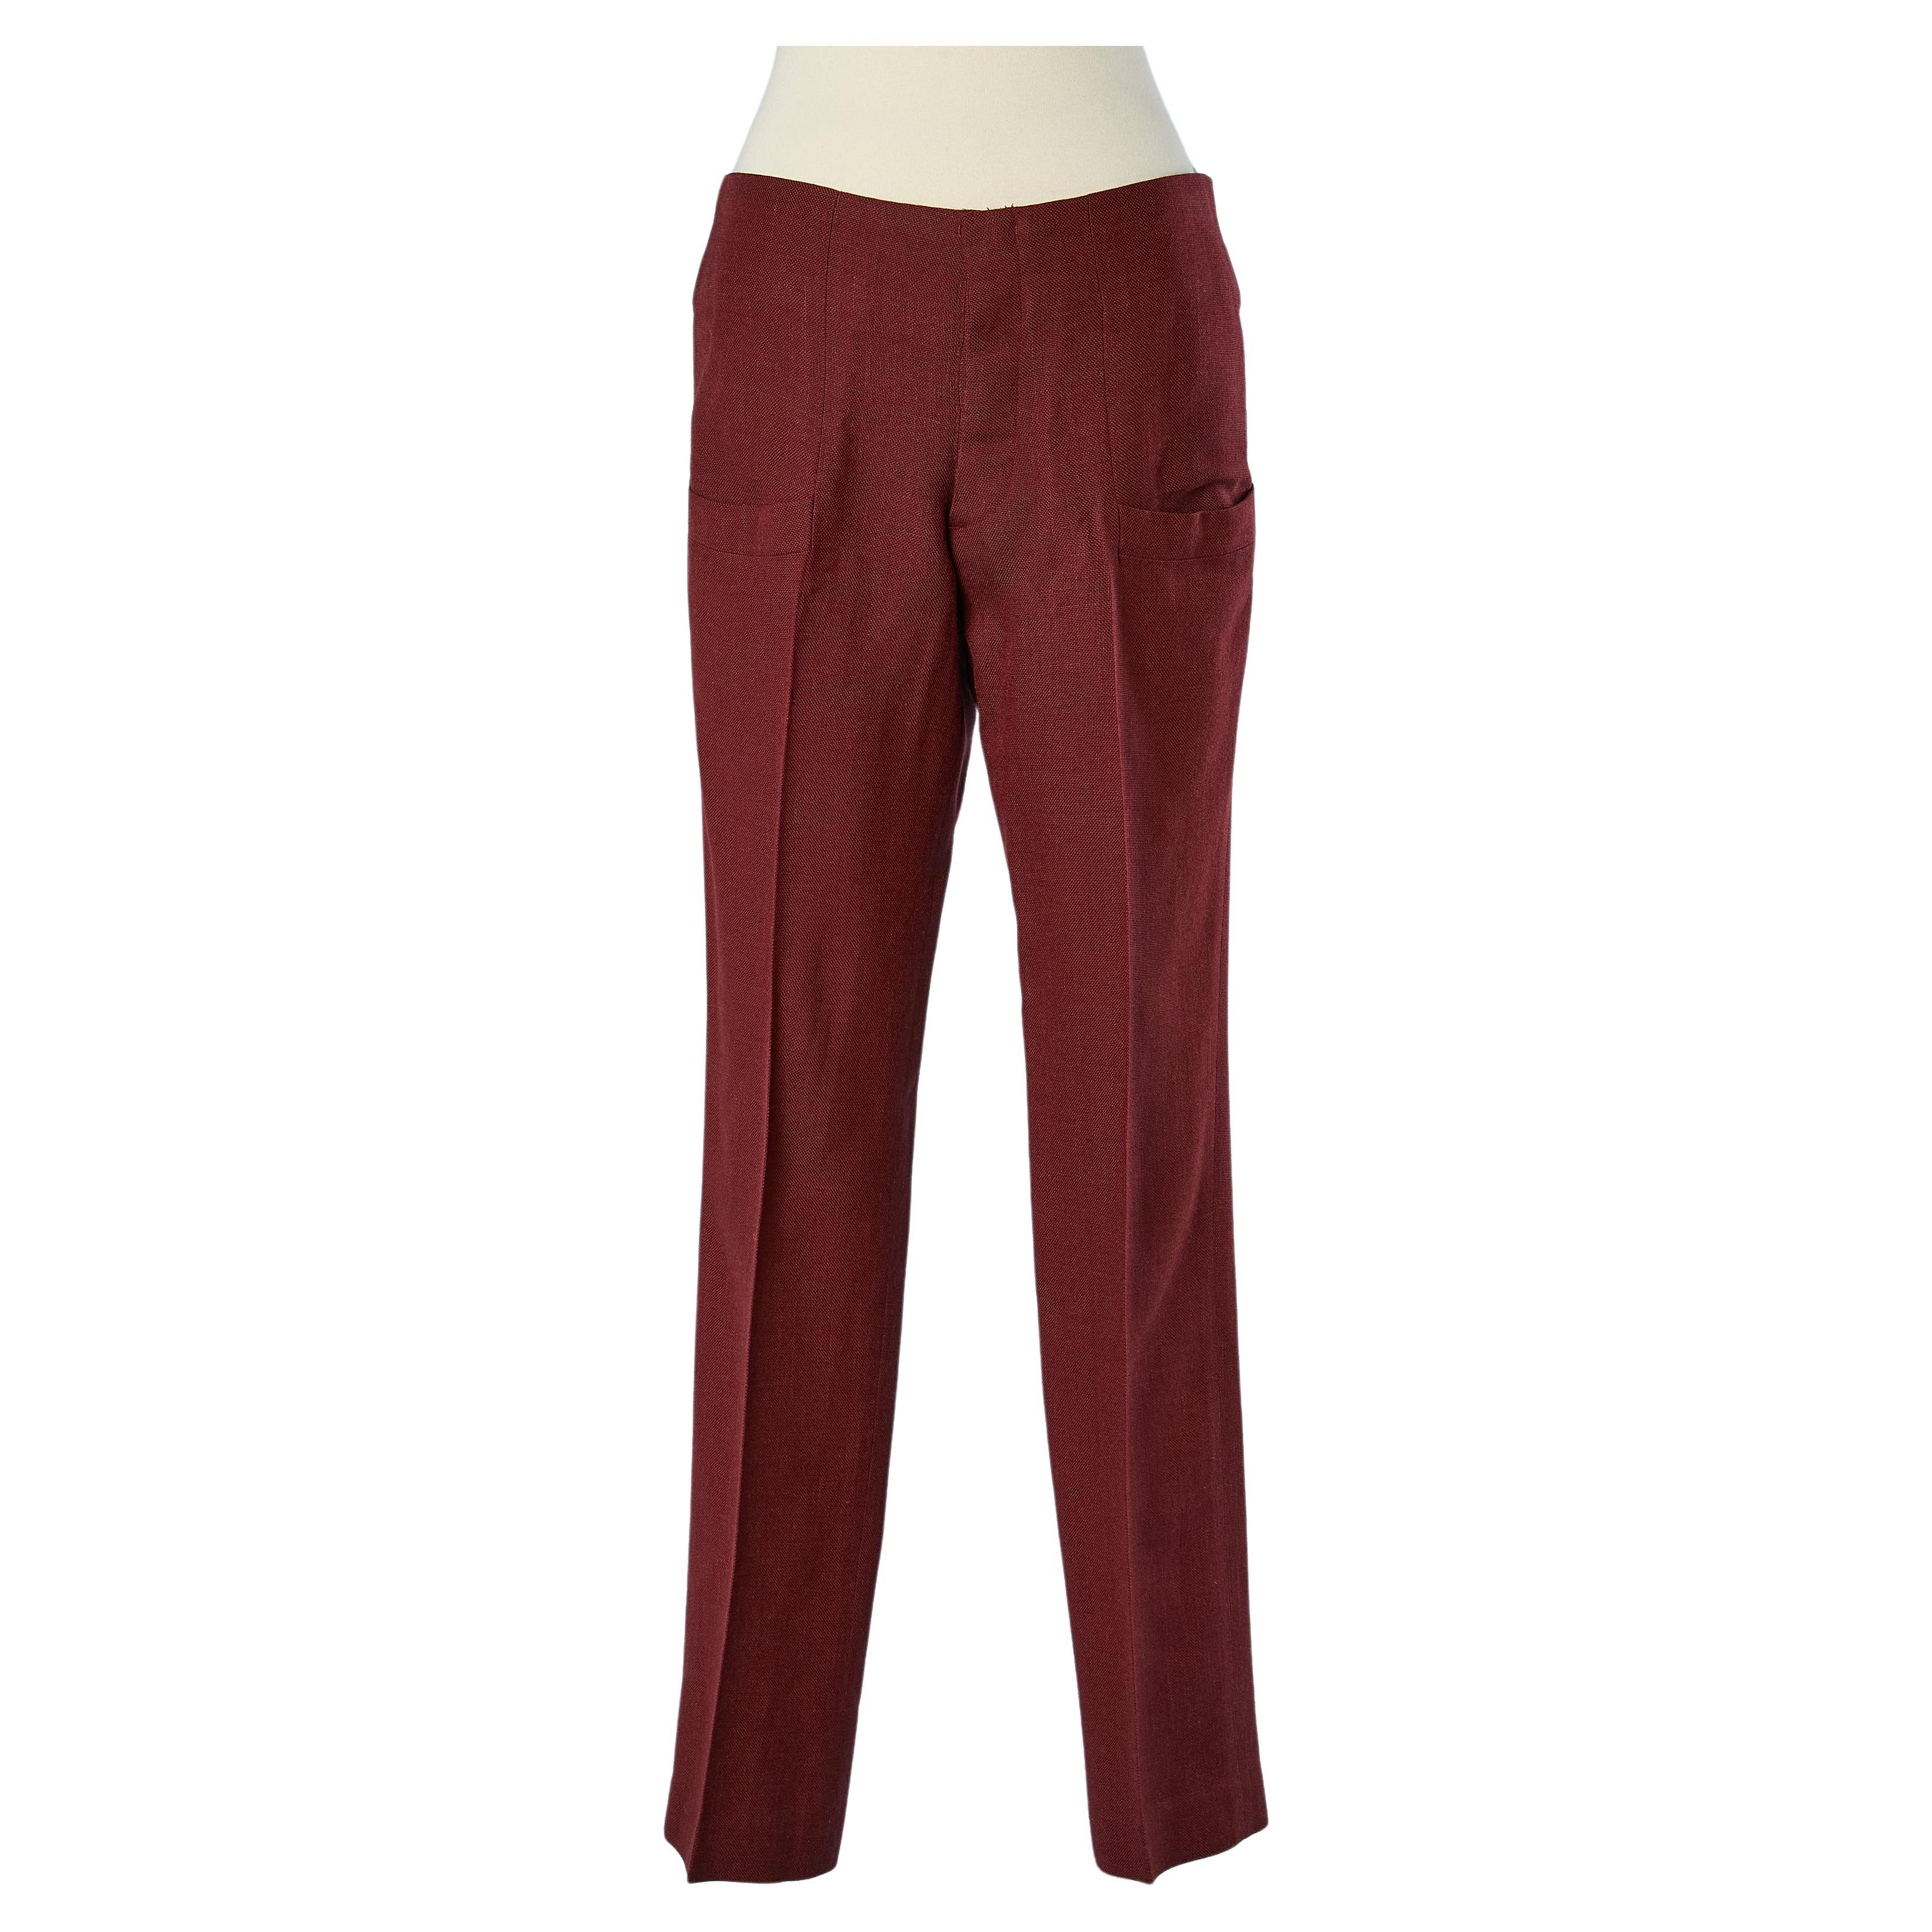 Burgundy linen and acrylic high-waisted trouser Pierre Cardin 